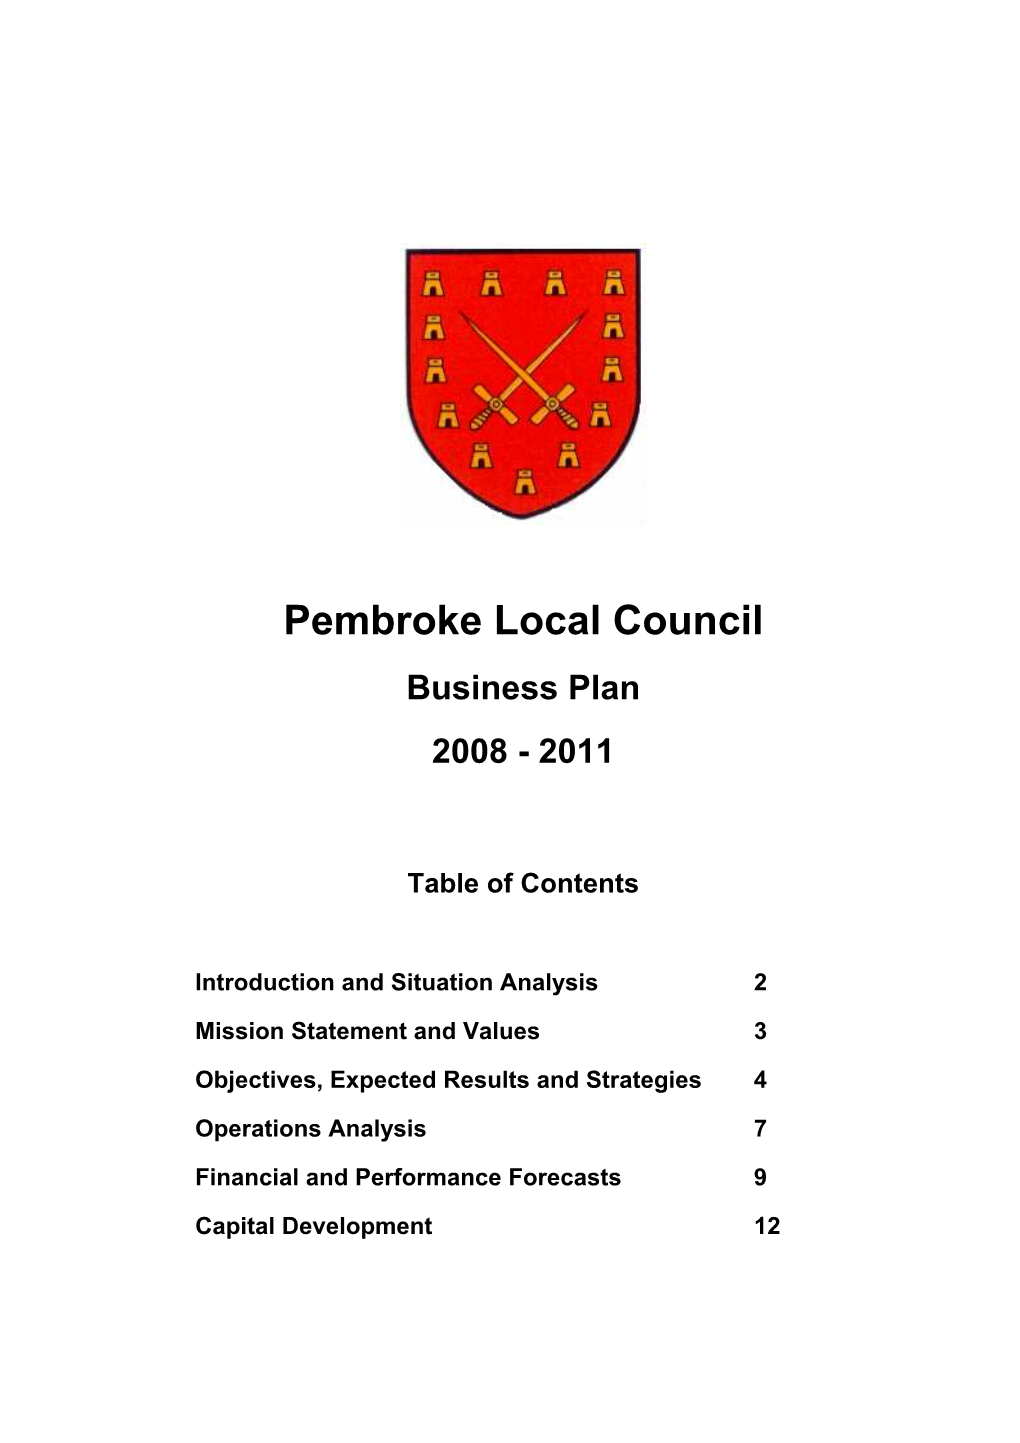 Business Plan 2008-2011